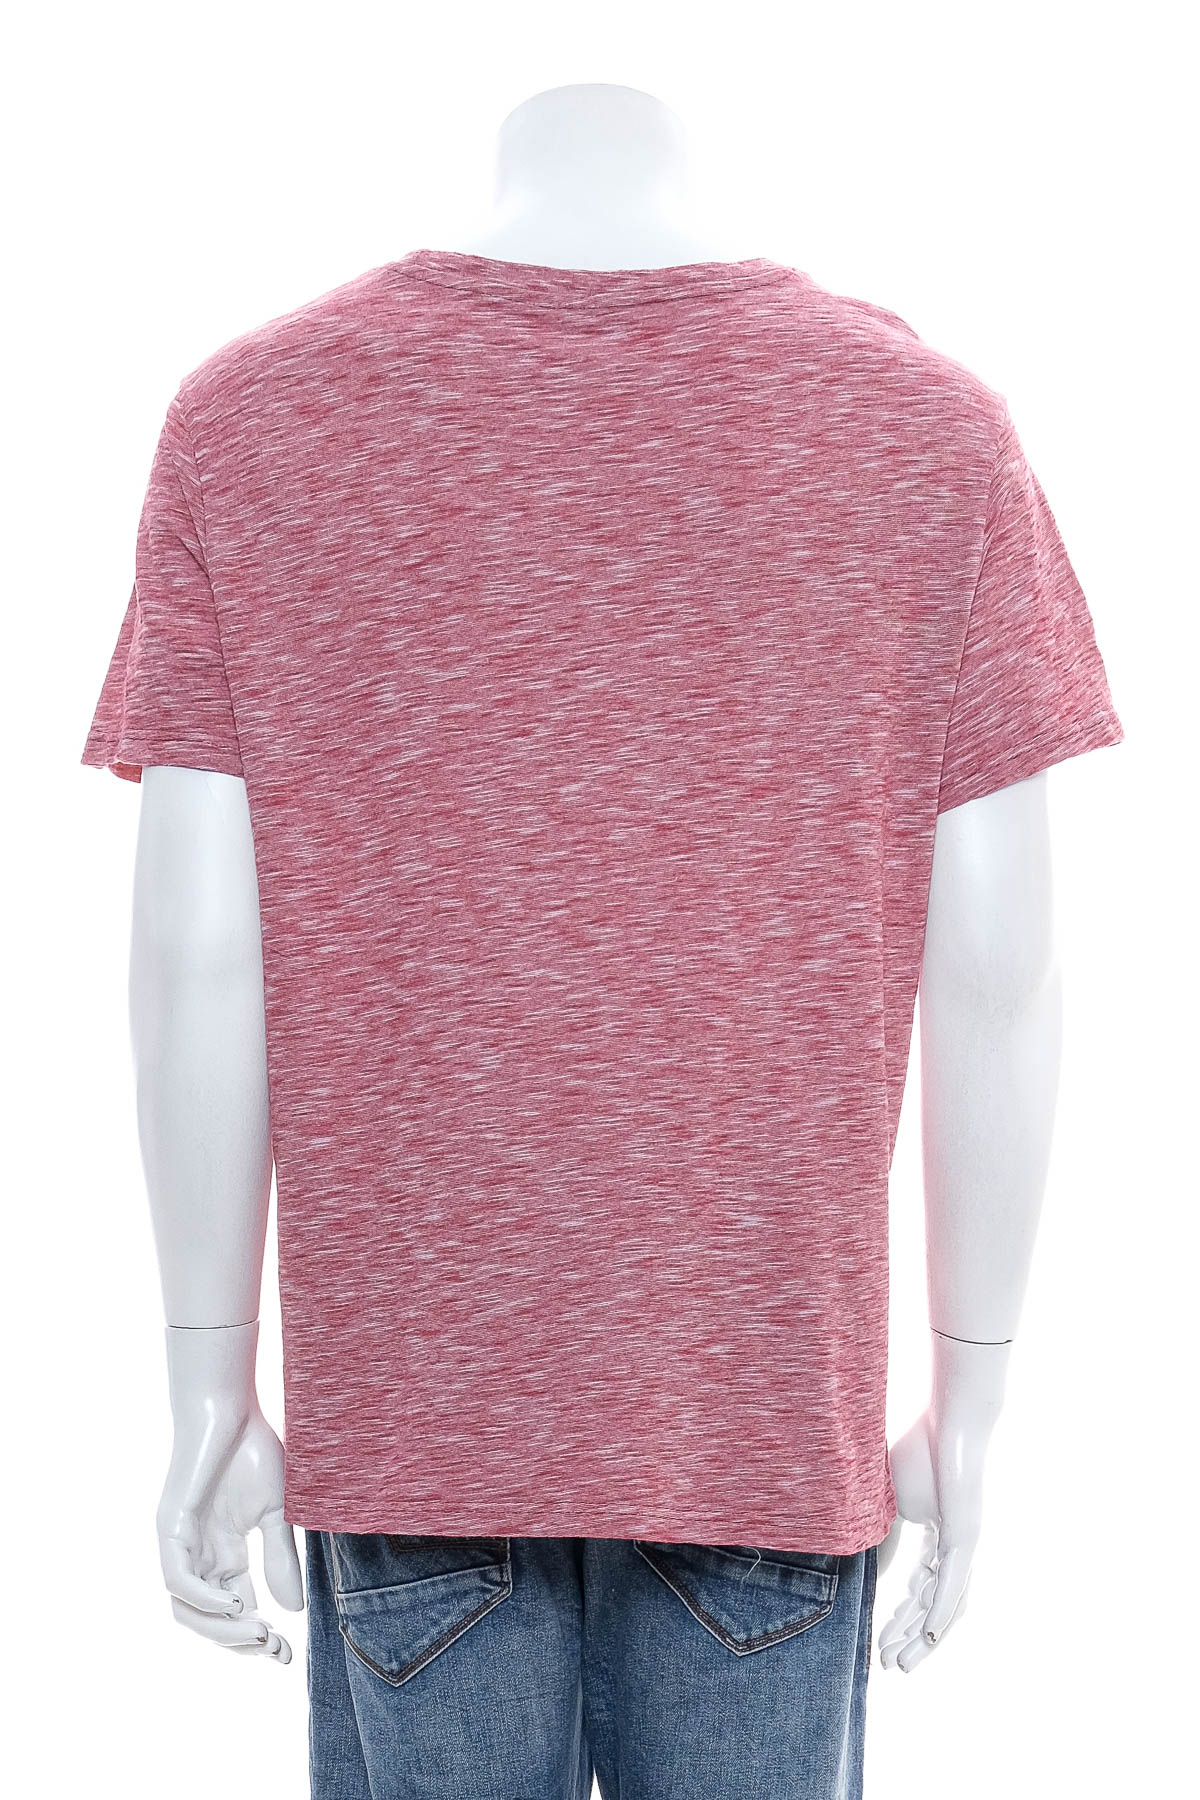 Men's T-shirt - The Basics x C&A - 1